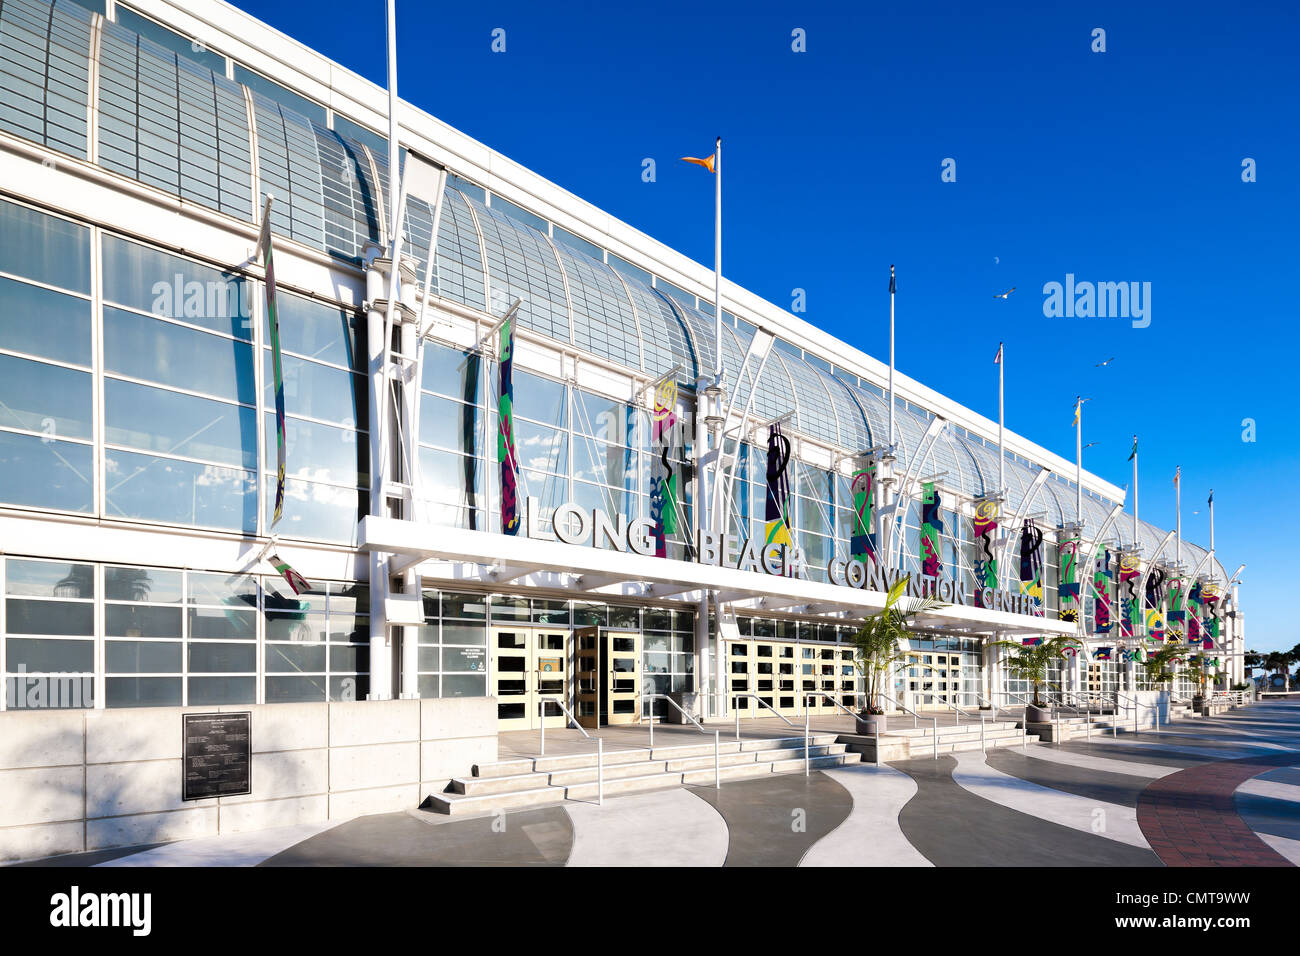 Long Beach Convention Center. Long Beach Convention and Entertainment Center, main entrance, exterior, daytime sunny. Stock Photo